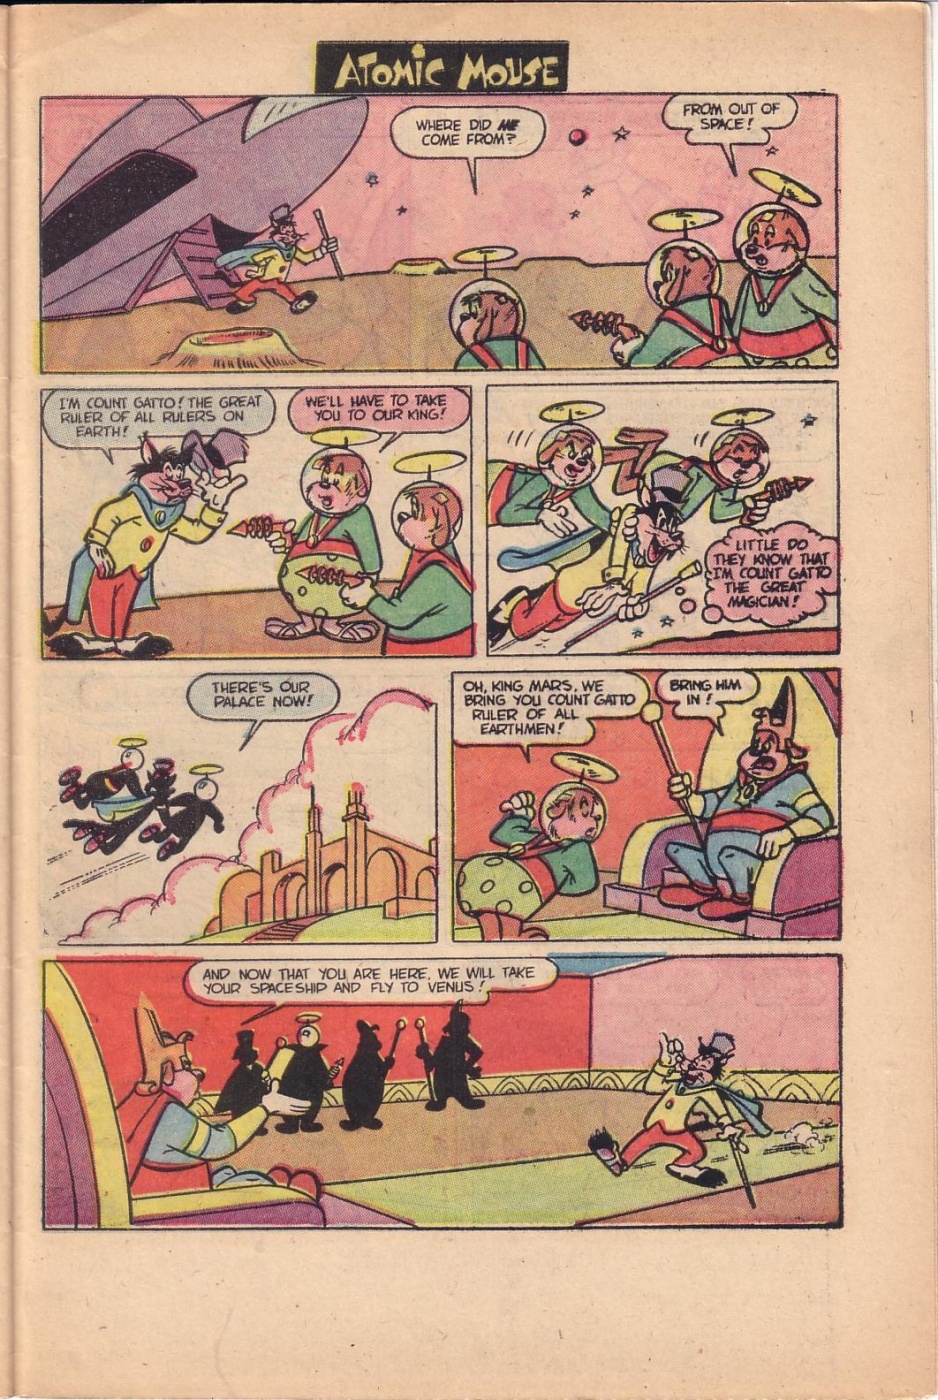 Atomic Mouse Comics - Funny Comics (29)